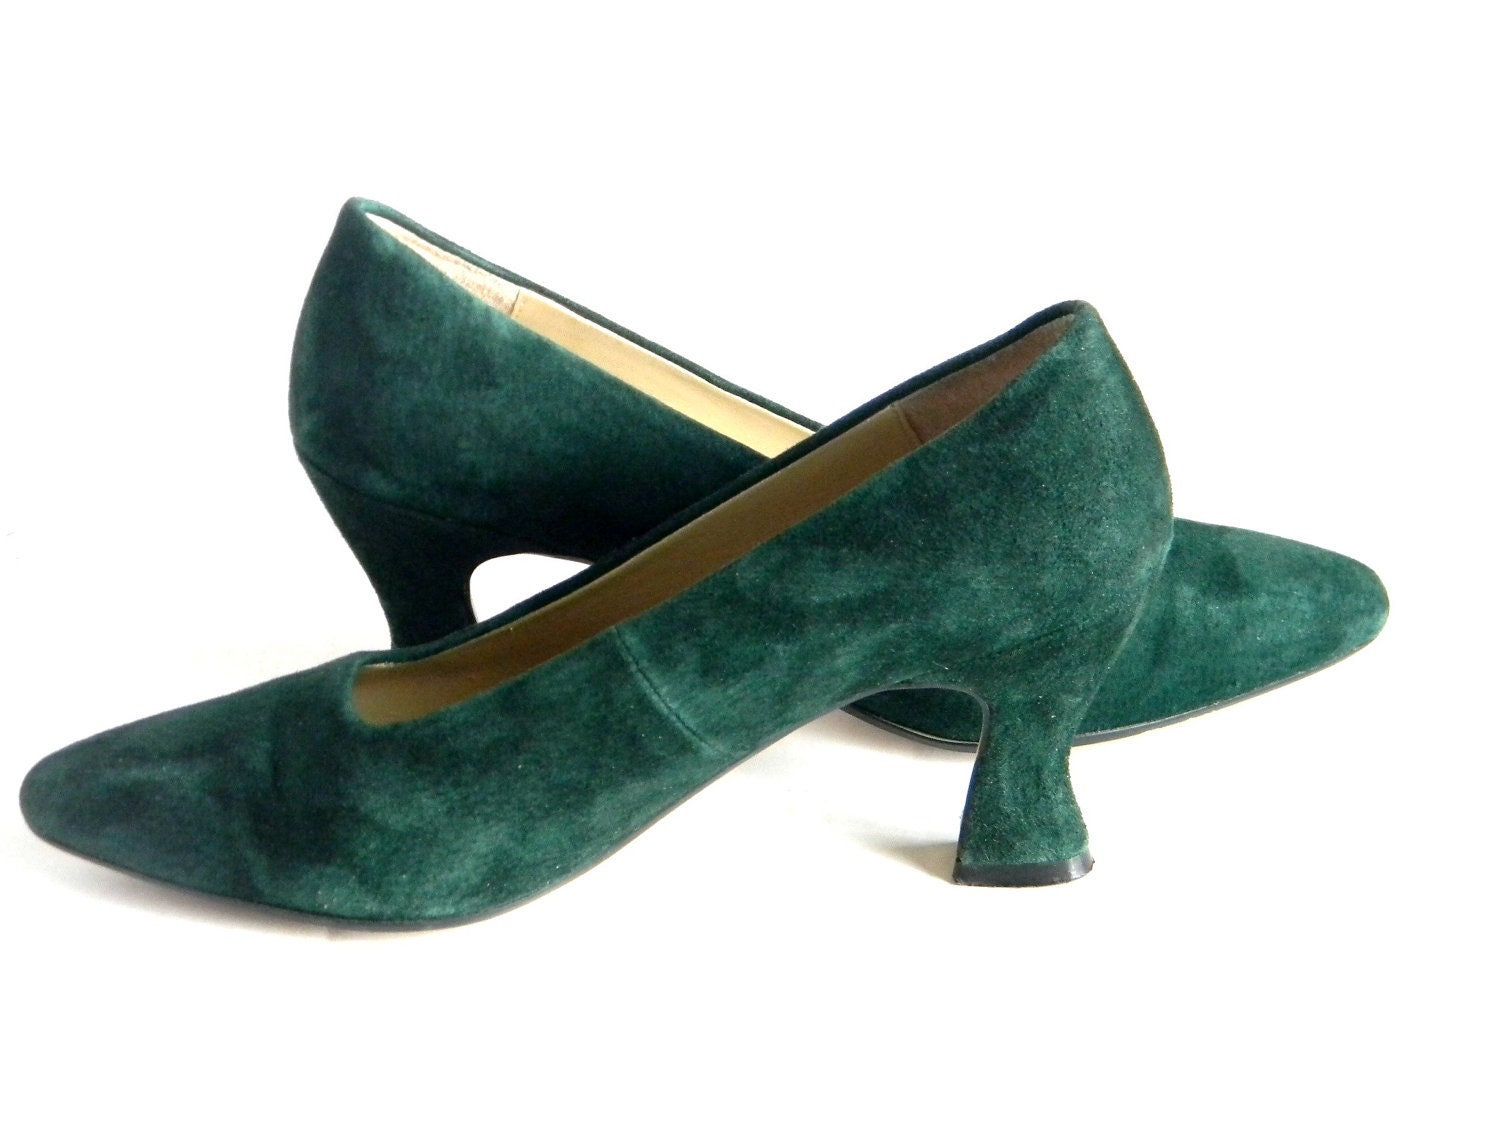 SALE Vintge Emerald Green Suede Mid Heel shoes 1980s Pump Mad